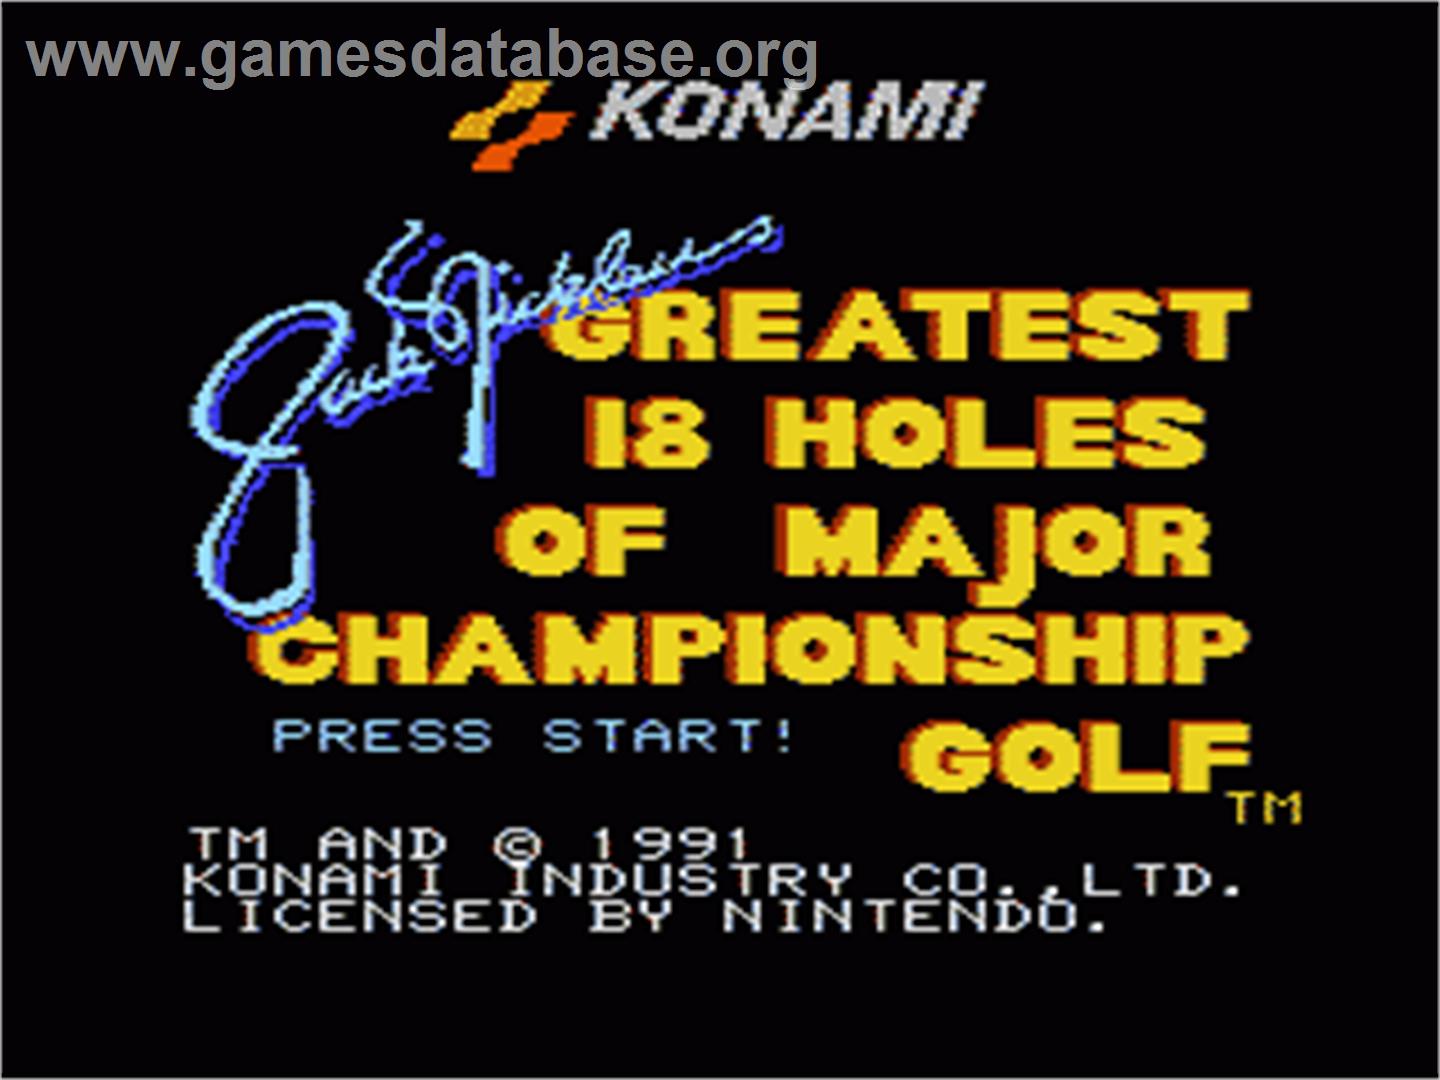 Jack Nicklaus' Greatest 18 Holes of Major Championship Golf - Nintendo NES - Artwork - Title Screen